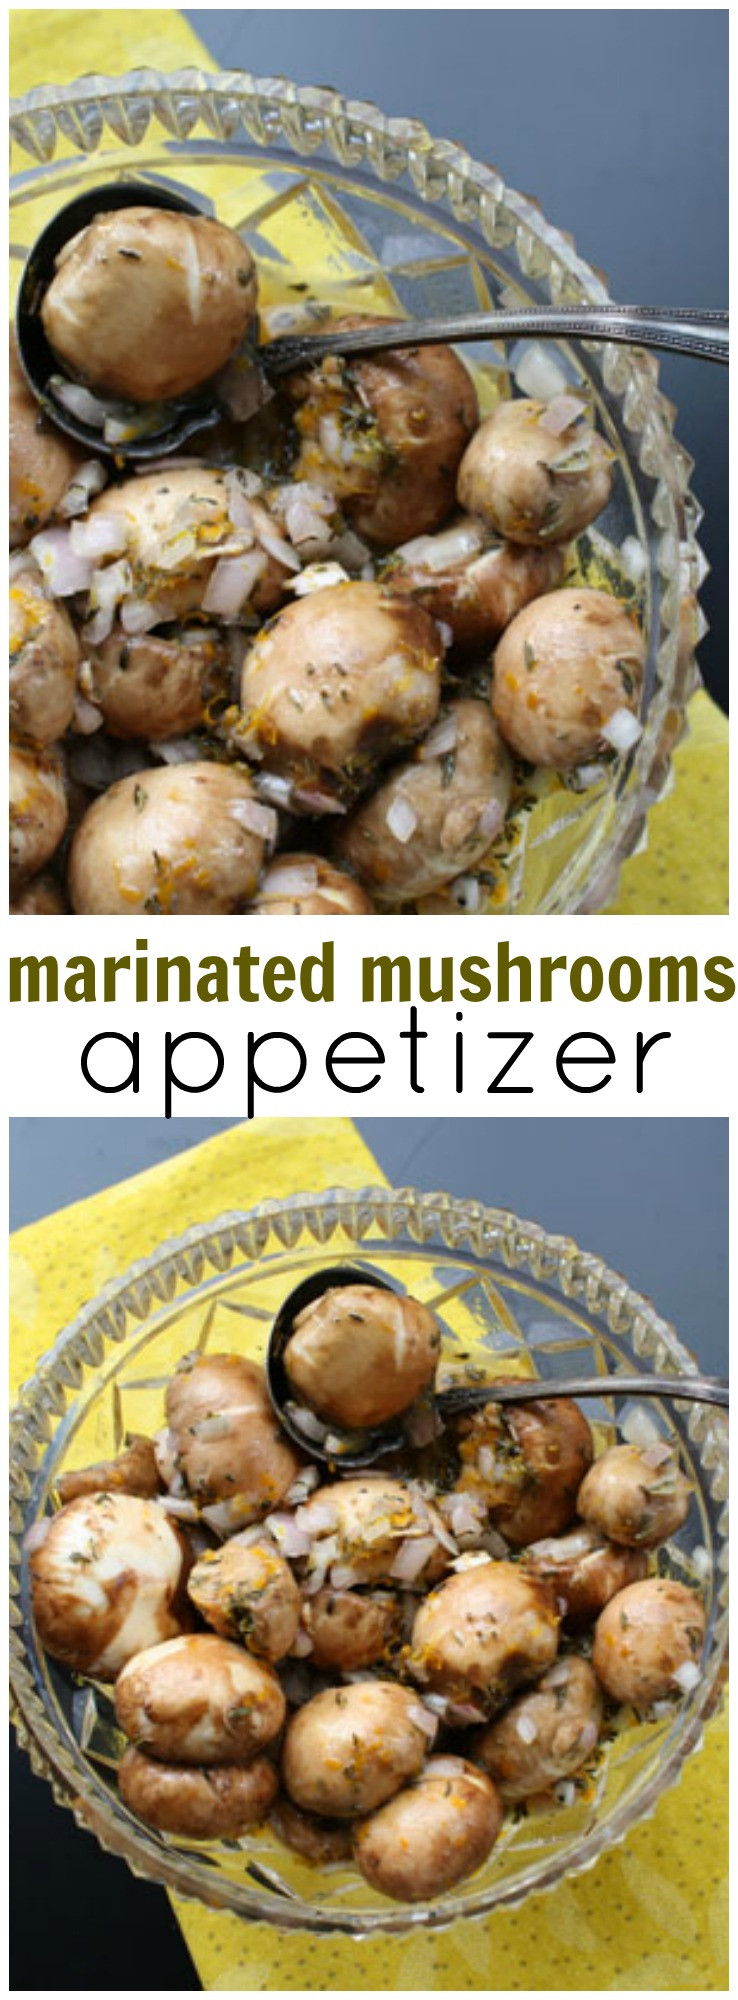 Mushrooms Appetizer Recipe
 Citrus Marinated Mushrooms Appetizer